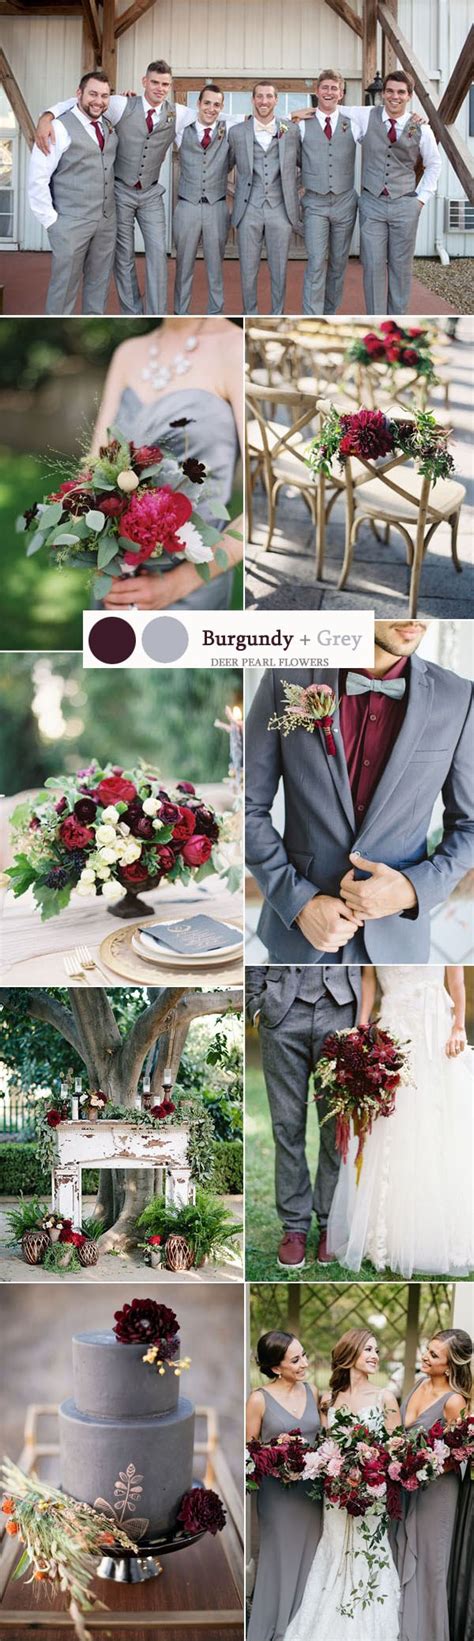 Top 8 Burgundy Wedding Color Palettes Youll Love Deer Pearl Flowers